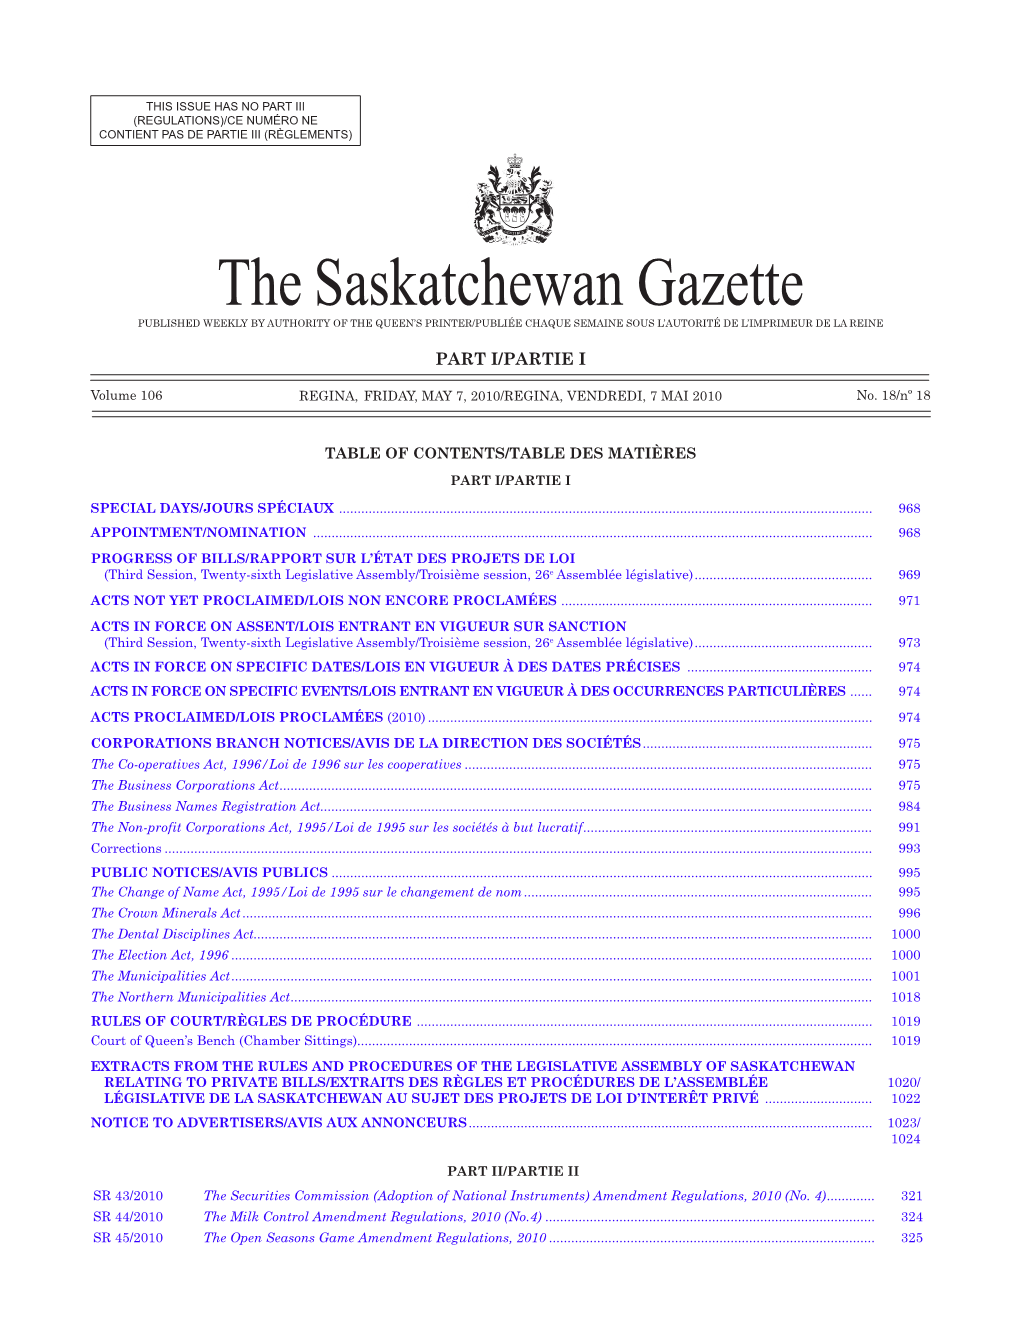 Sask Gazette, Part I, May 7, 2010